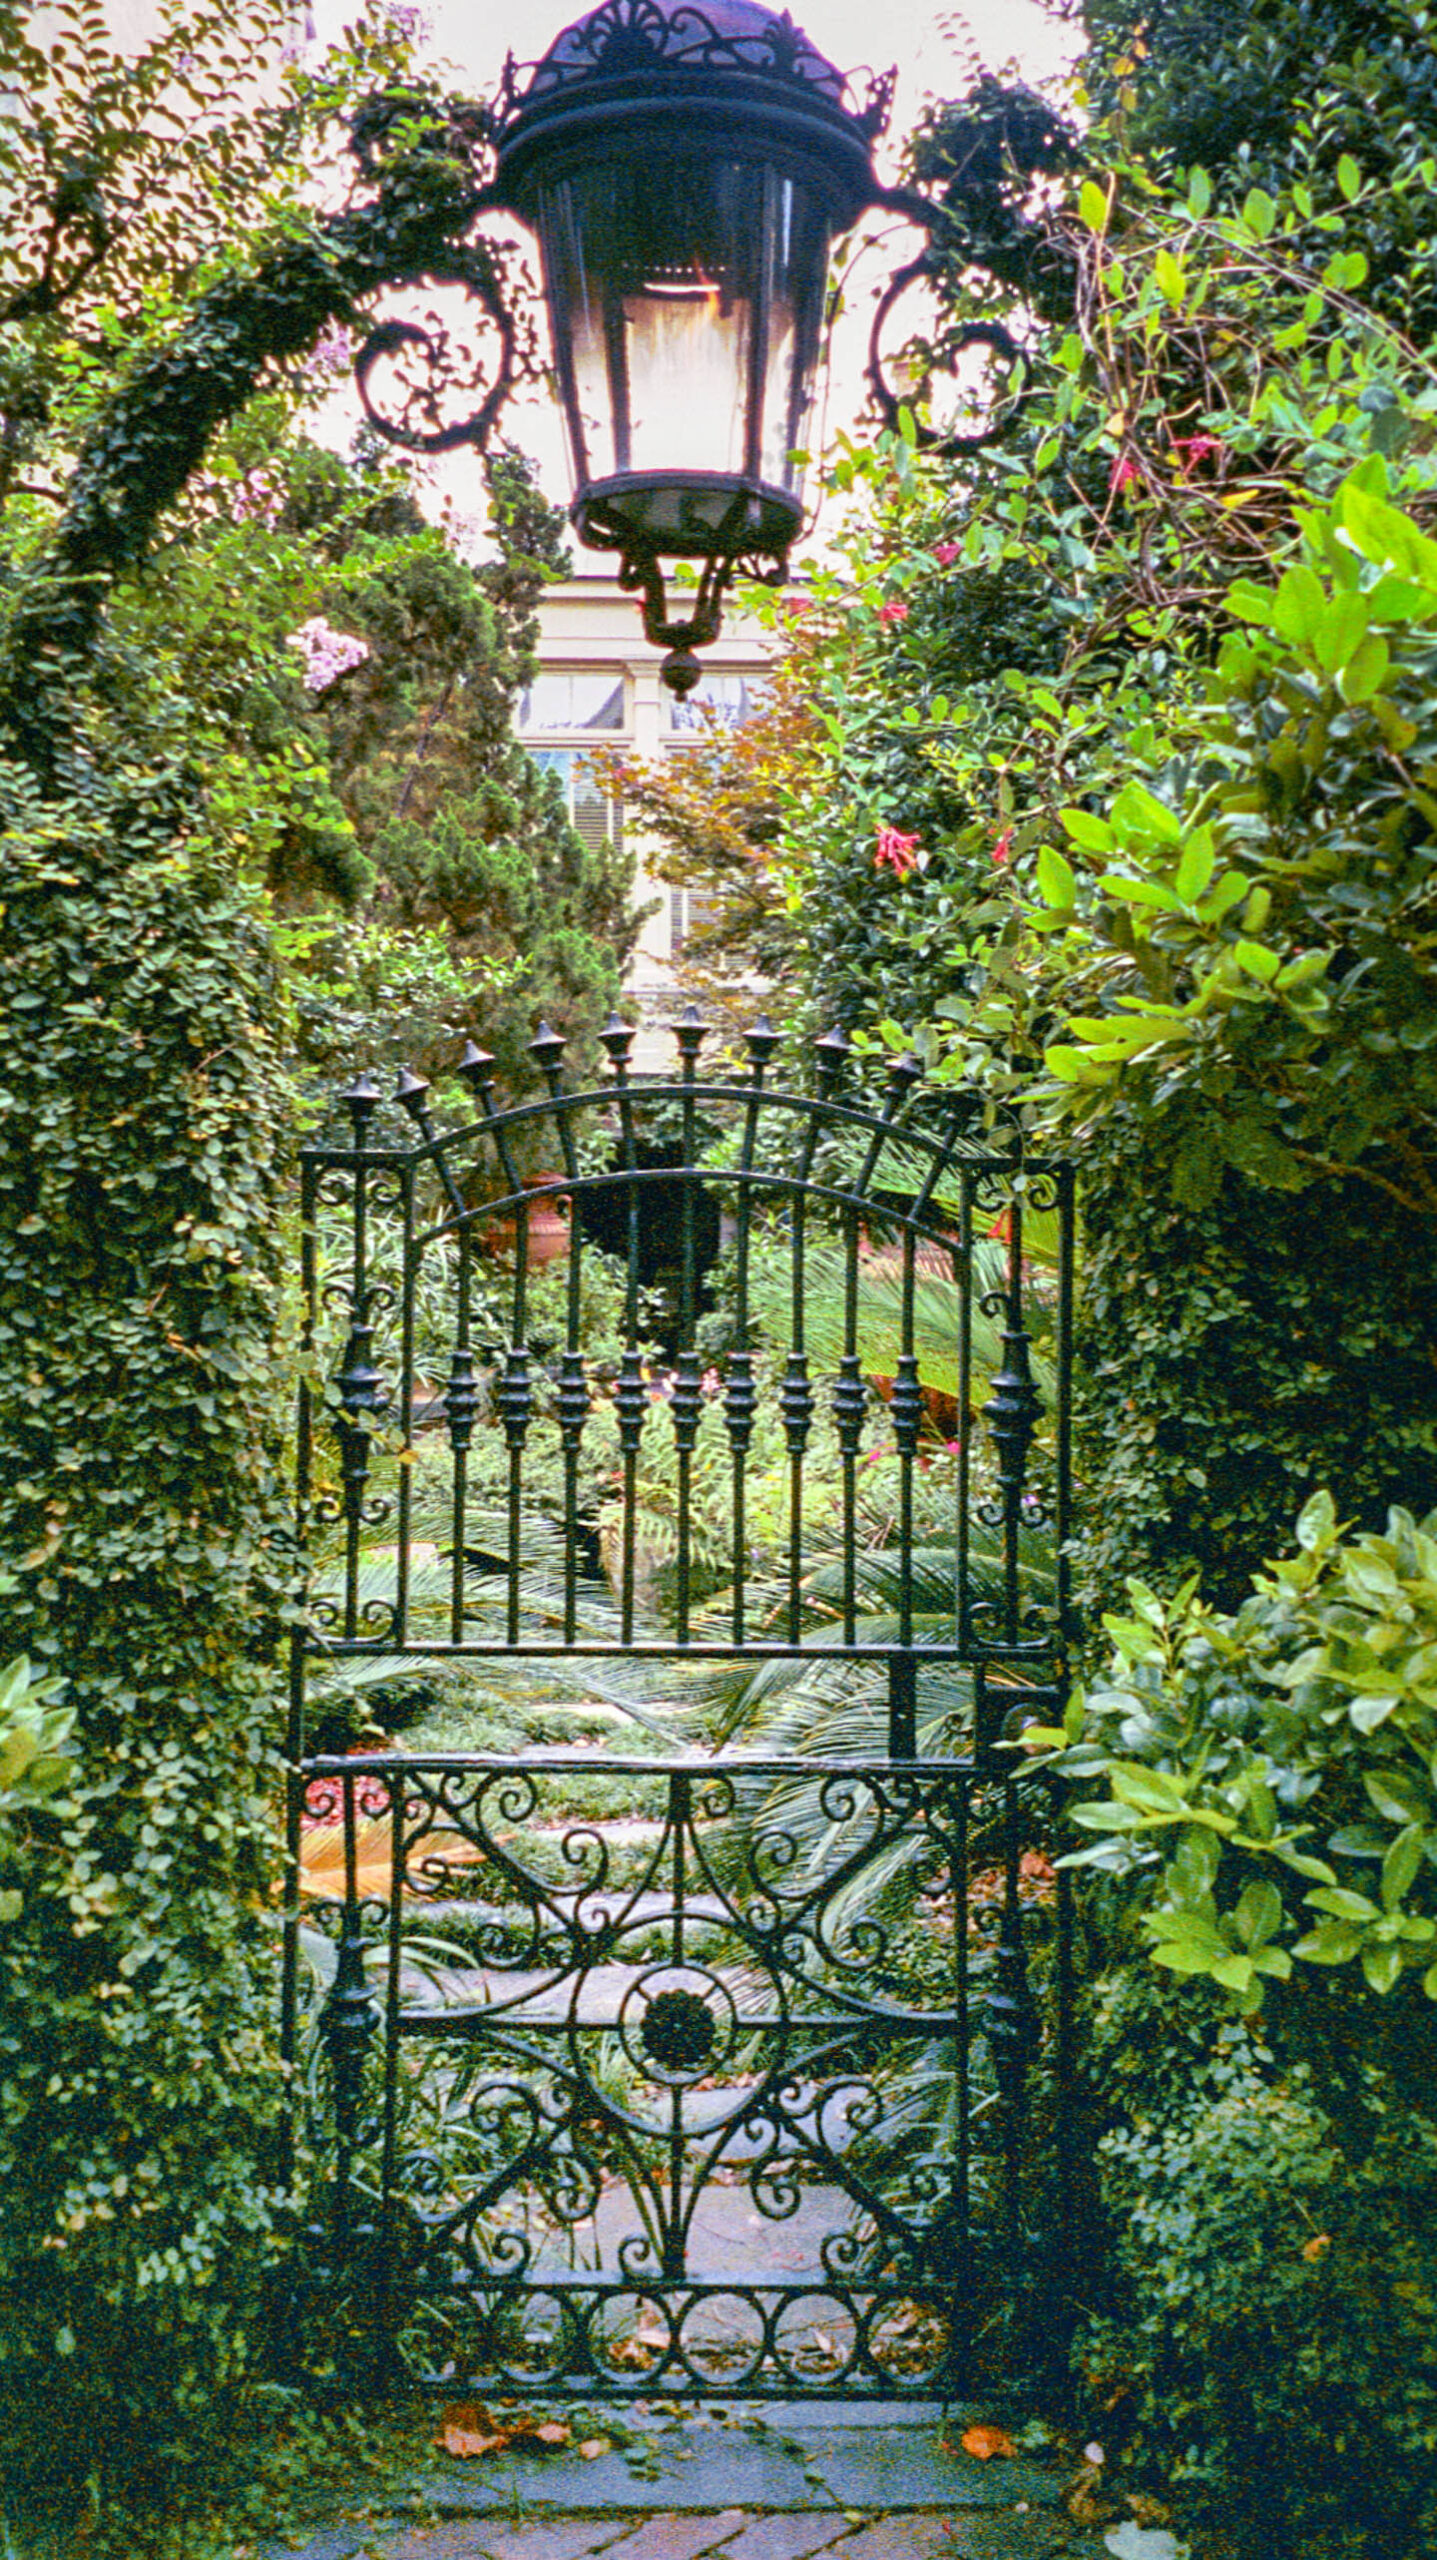 Charleston secret garden with a gas lantern and wrought iron gate